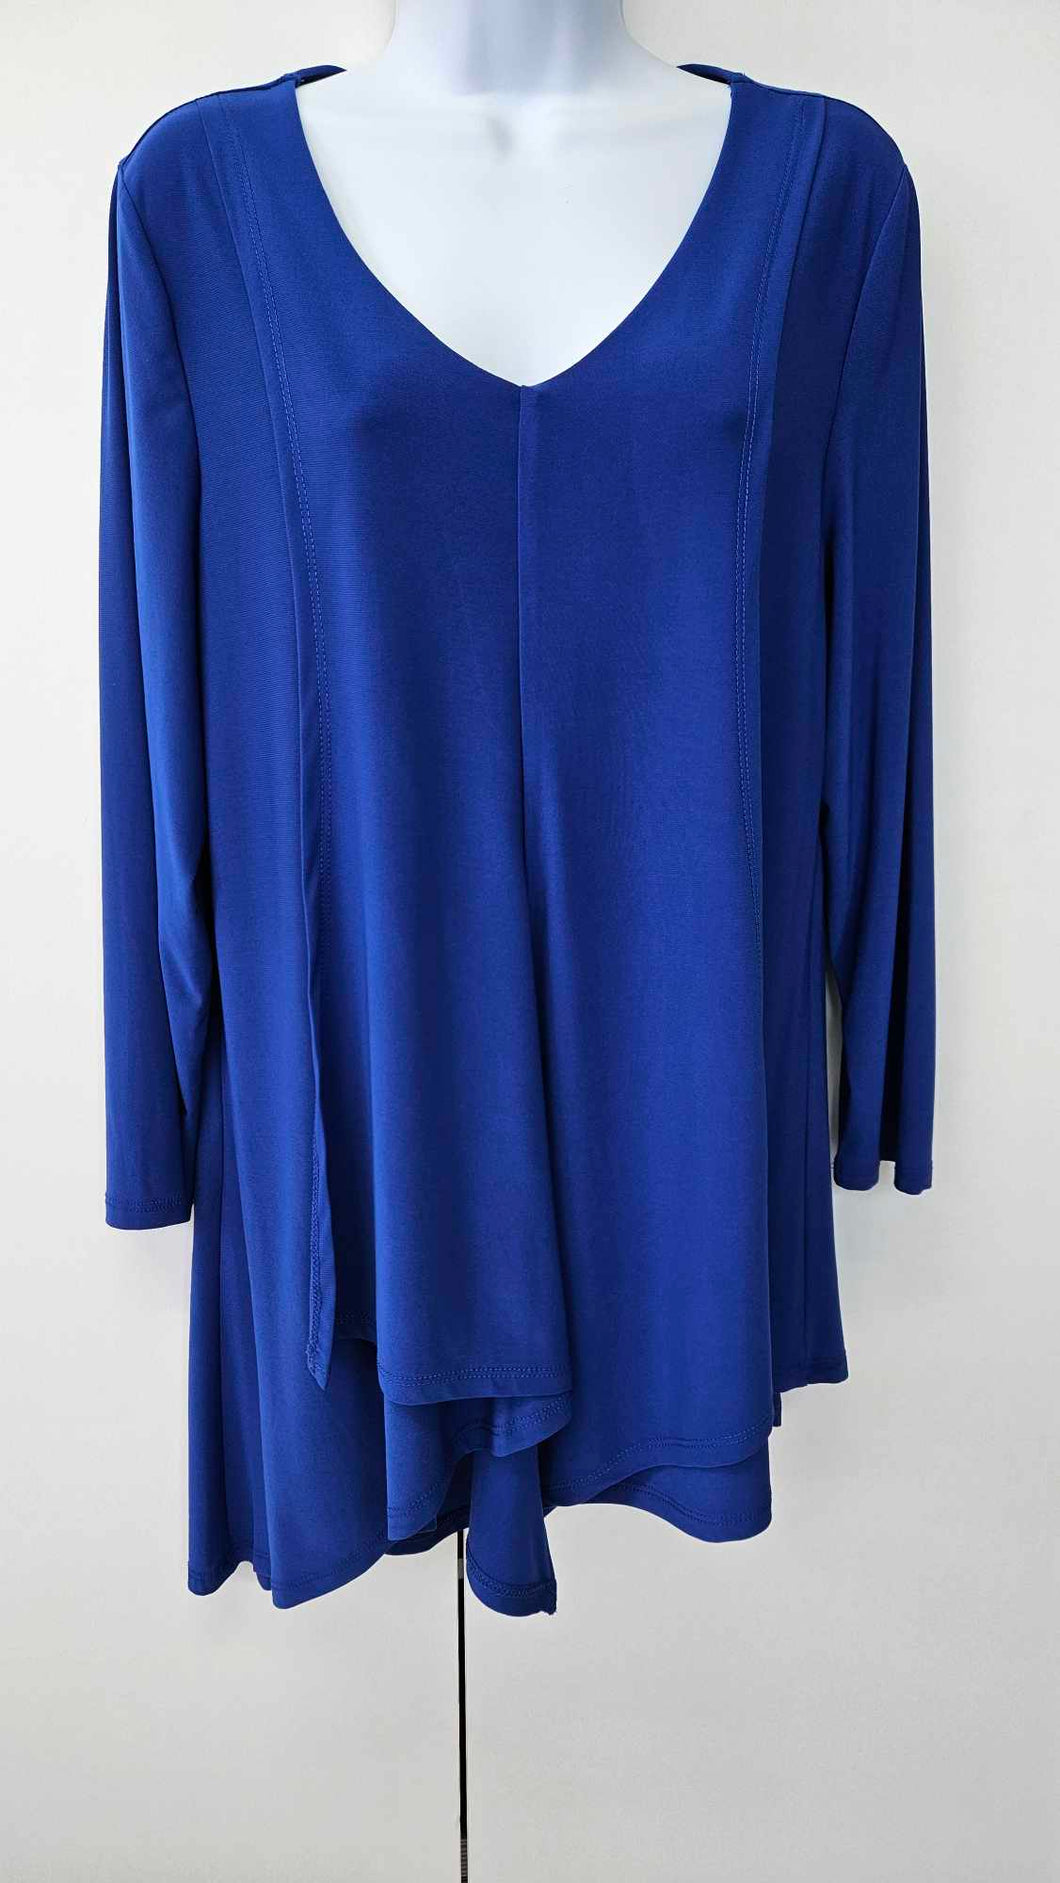 Gitane - T25506-LS - 3/4 Length Sleeves, V-Neck Top - Royal Blue